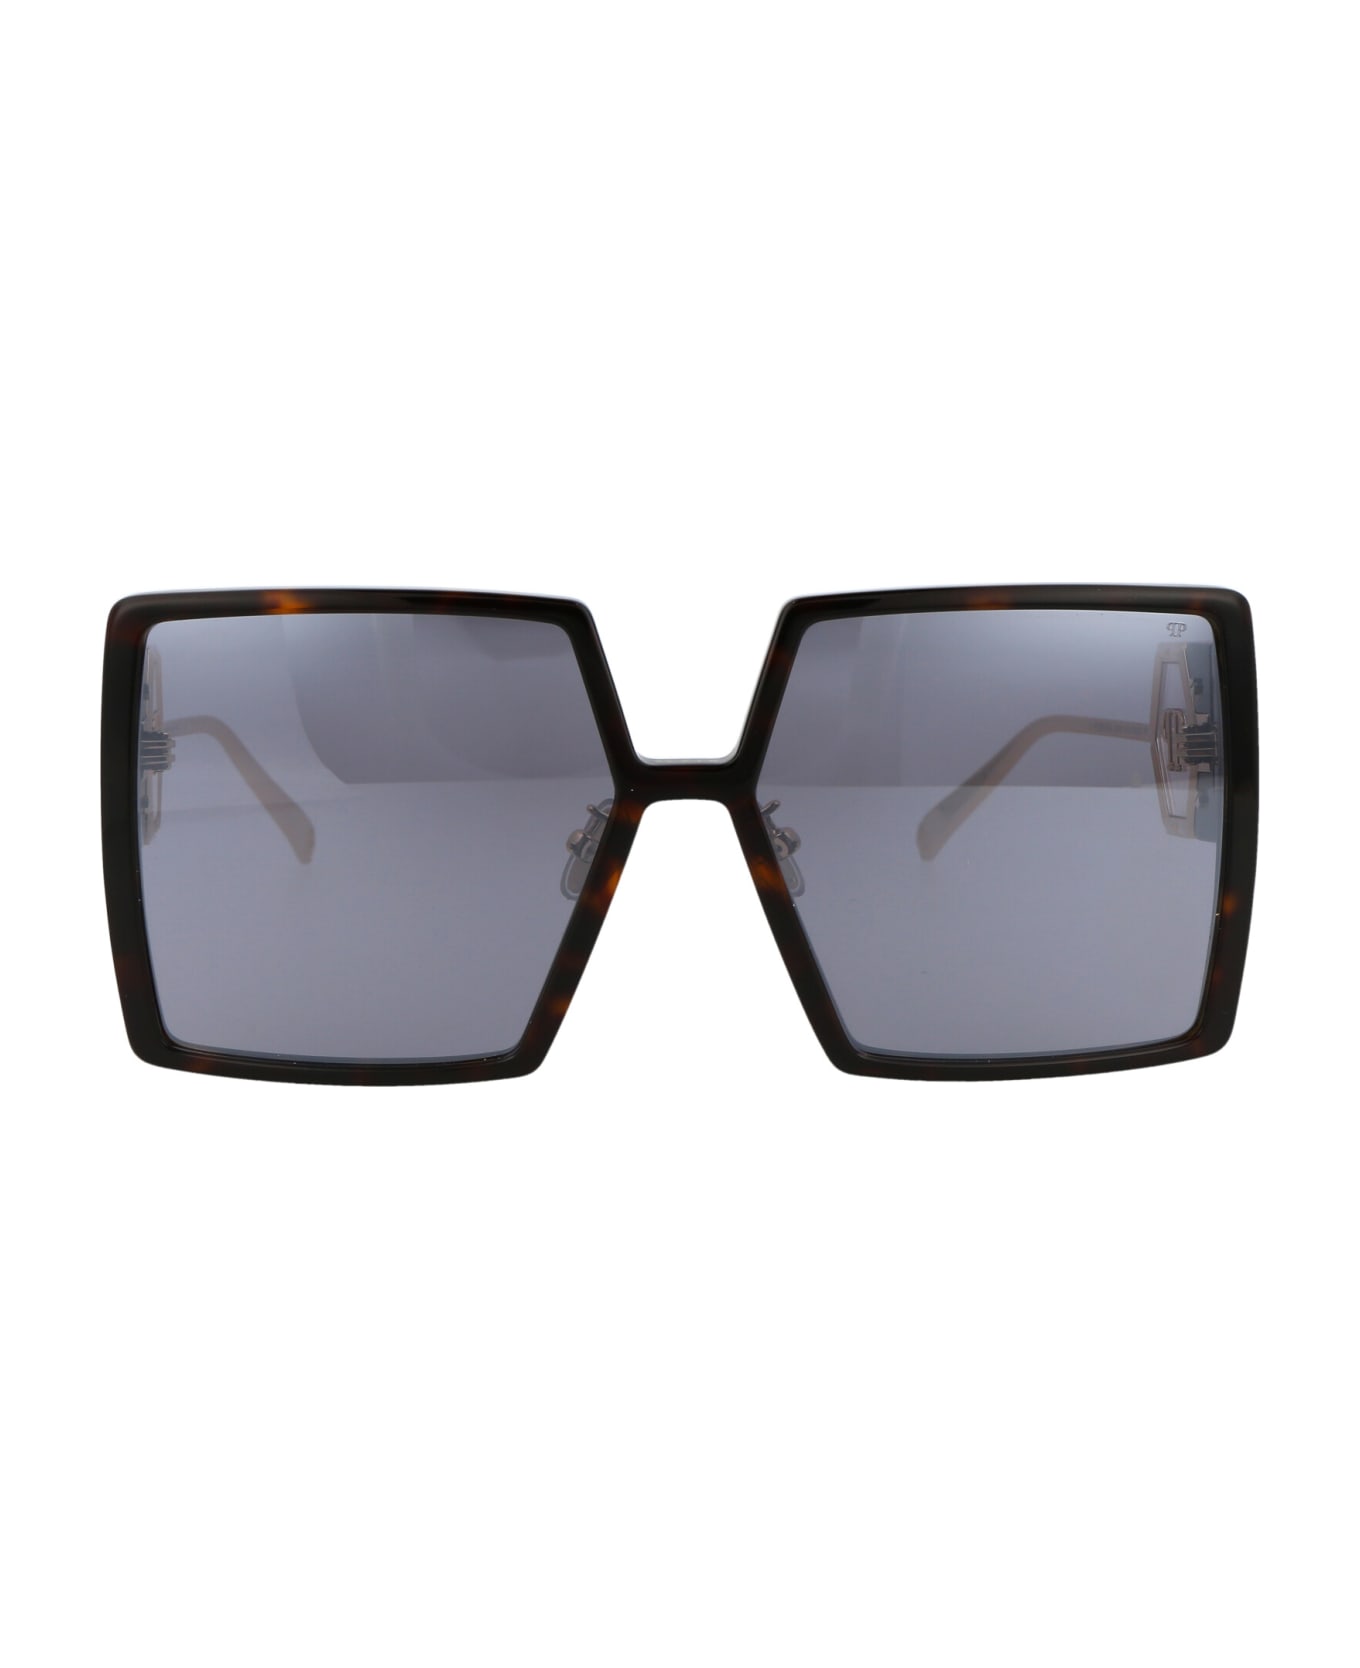 Philipp Plein Spp028m Sunglasses - 722X BROWN